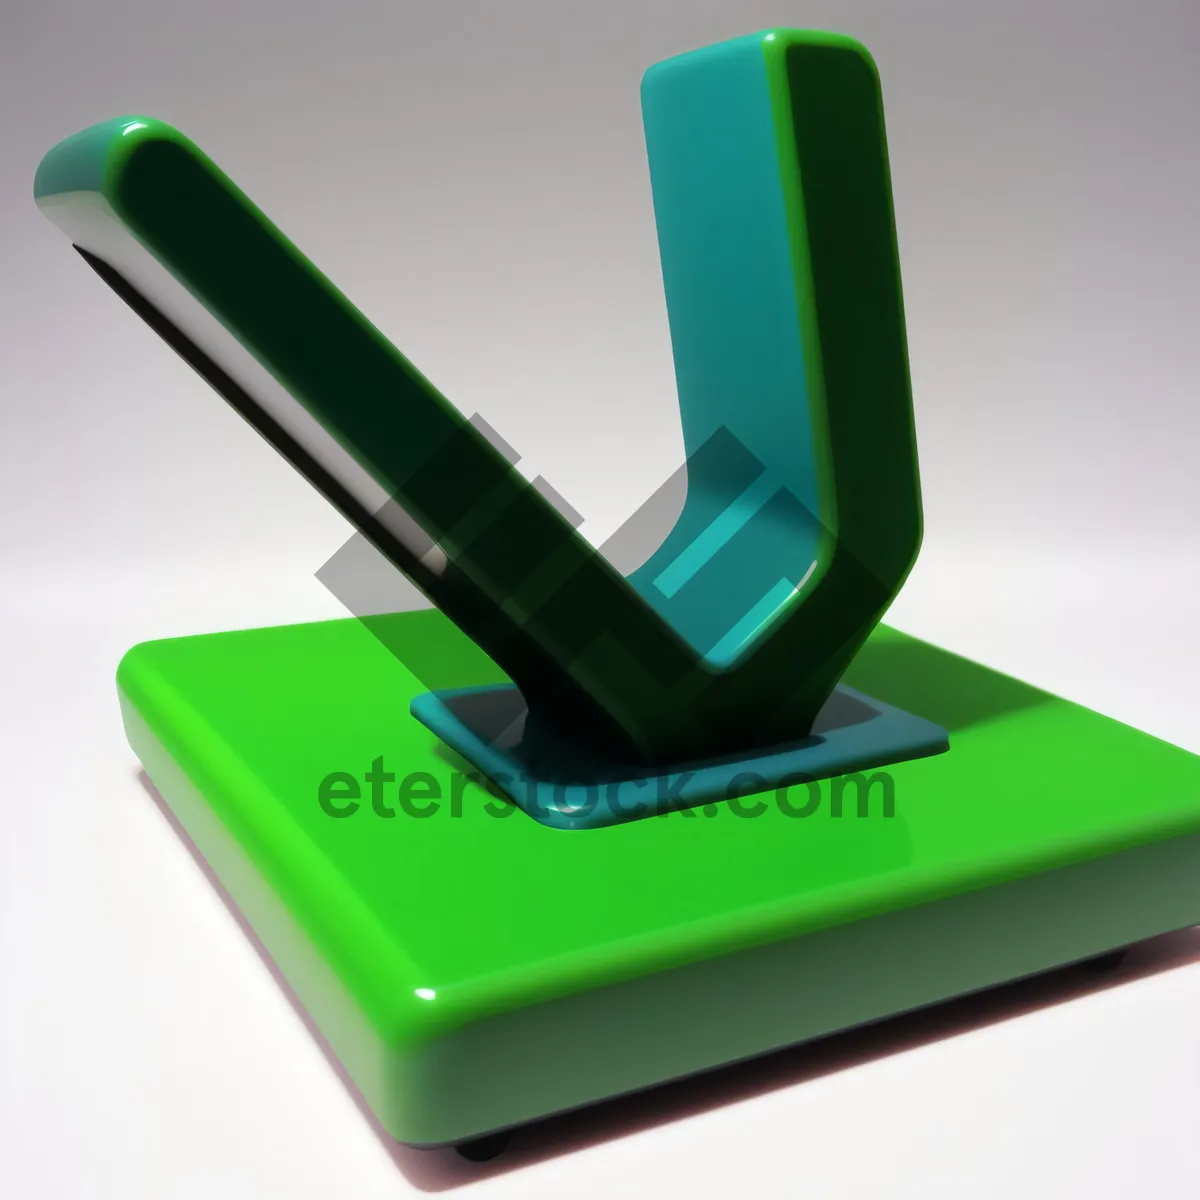 Picture of 3D Computer Stapler - Modern Business Equipment